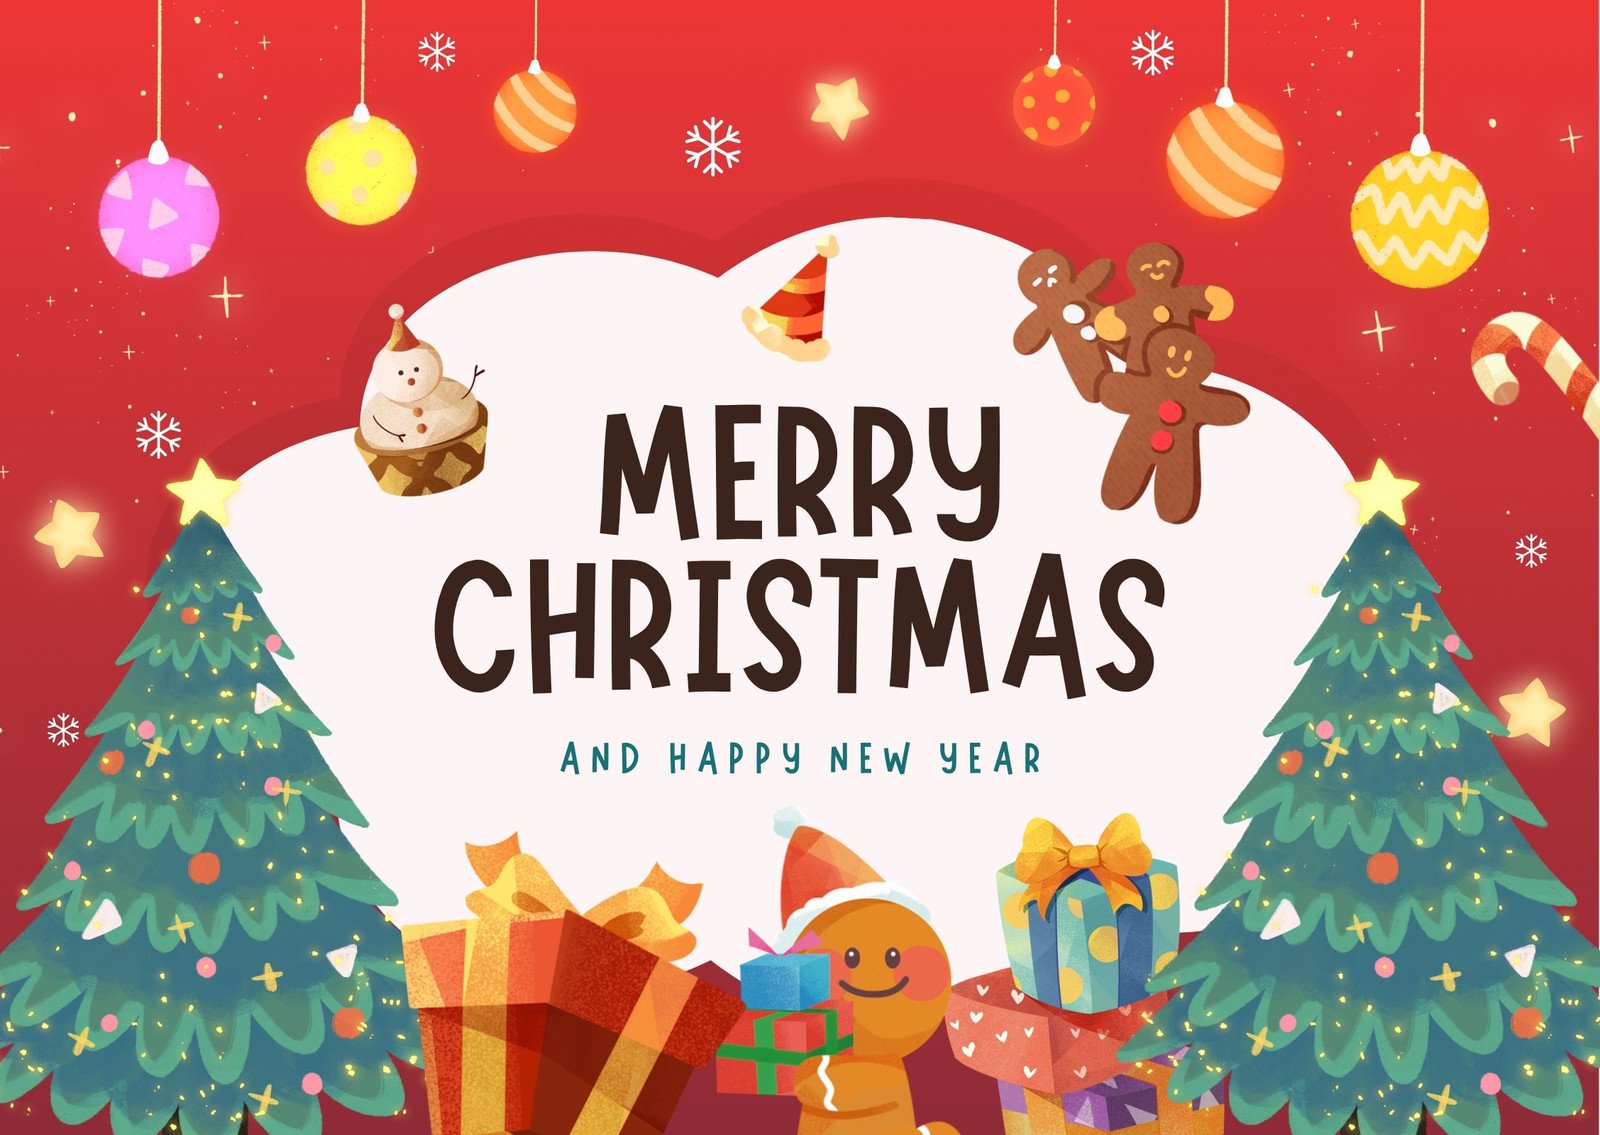 Customize 466+ Cute Christmas Card Templates Online - Canva